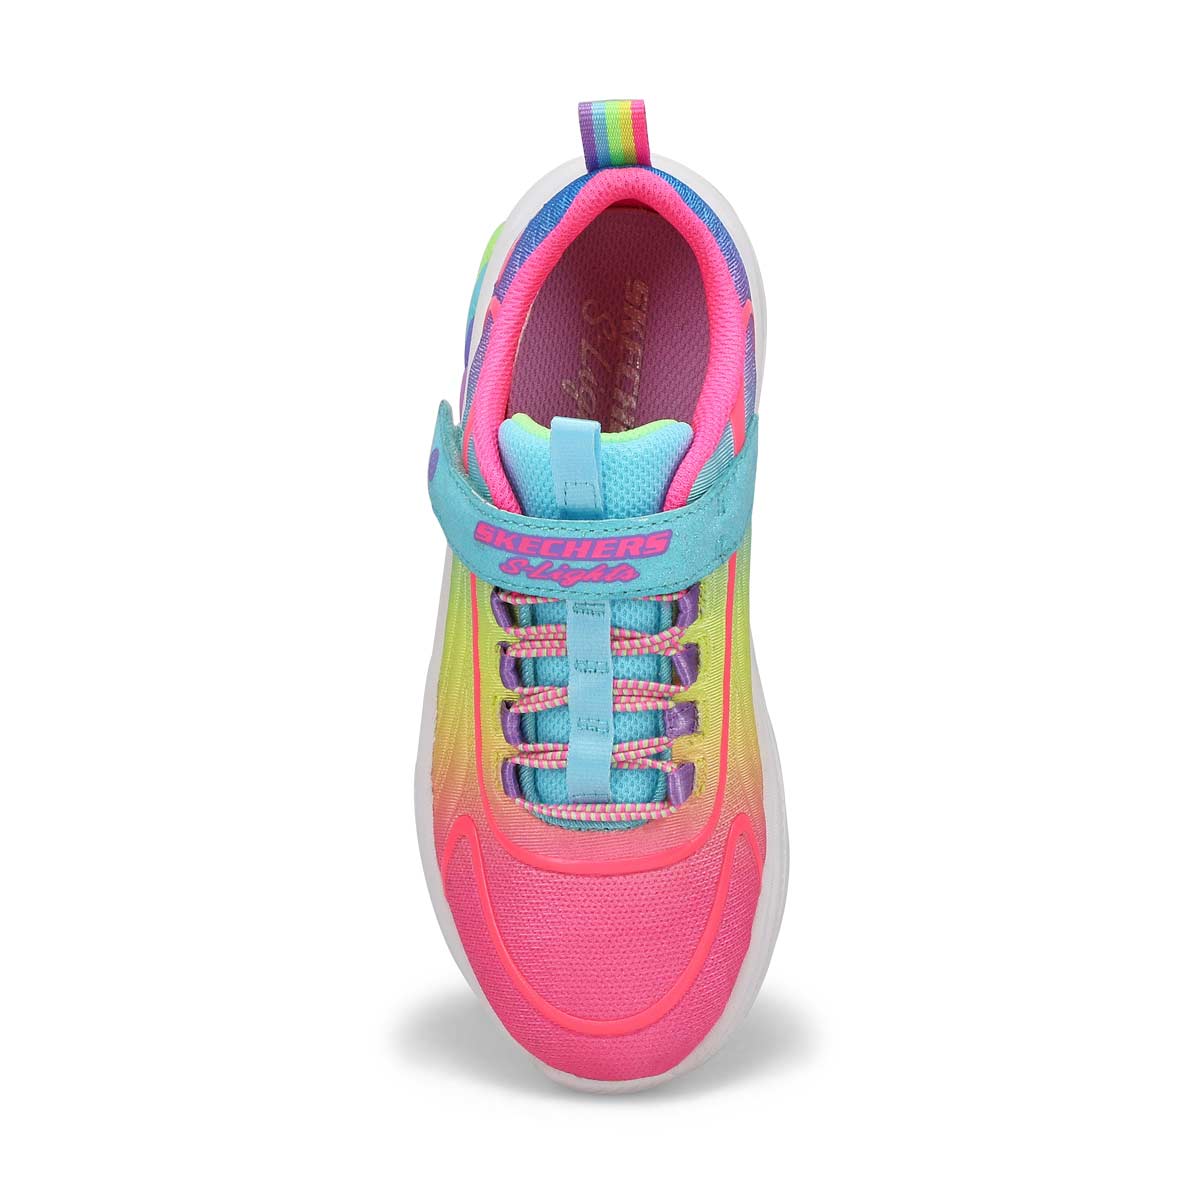 Girls' Rainbow Cruisers Light Up Sneaker -Turquoise/Multi